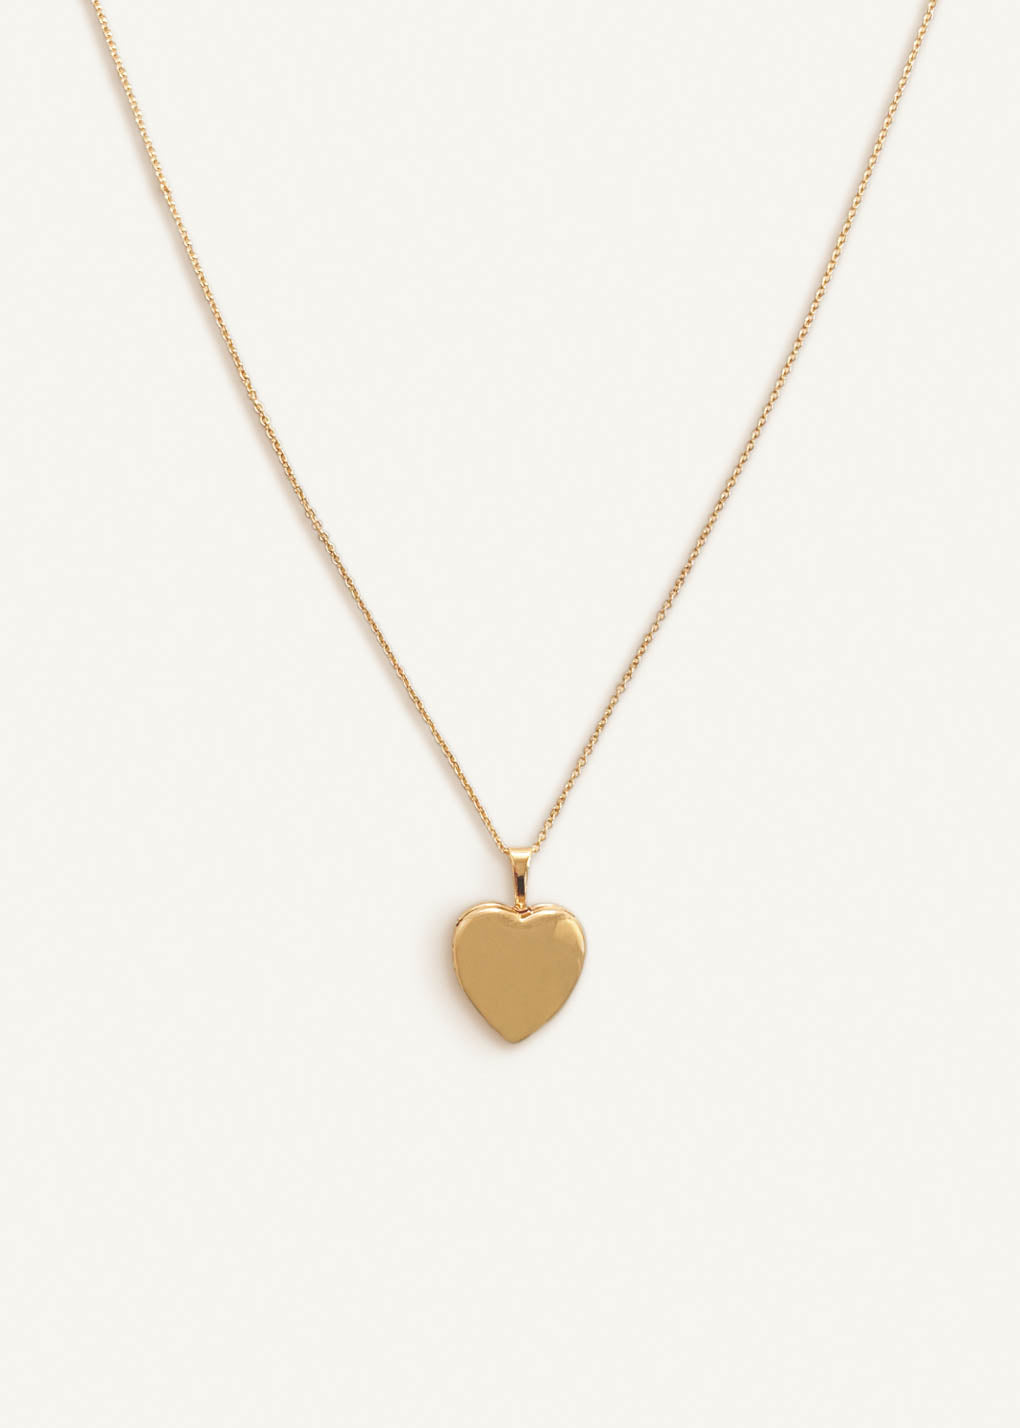 alt="Maison Heart Locket I with micro rolo chain"